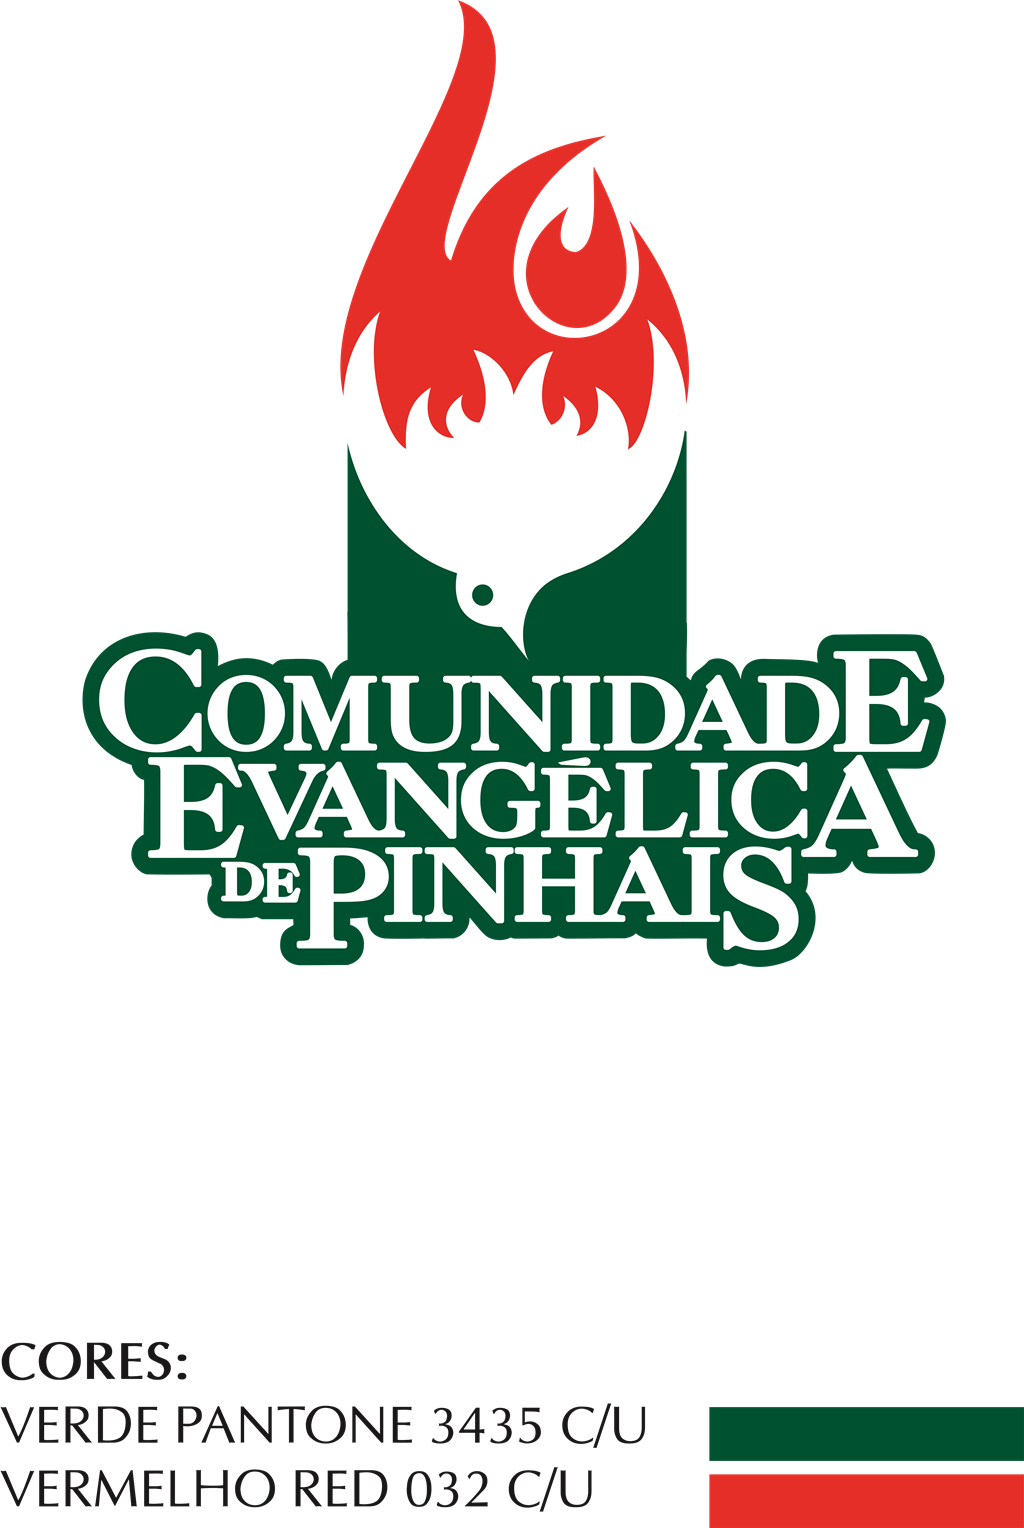 Comunicade de Pinhais logotype, transparent .png, medium, large